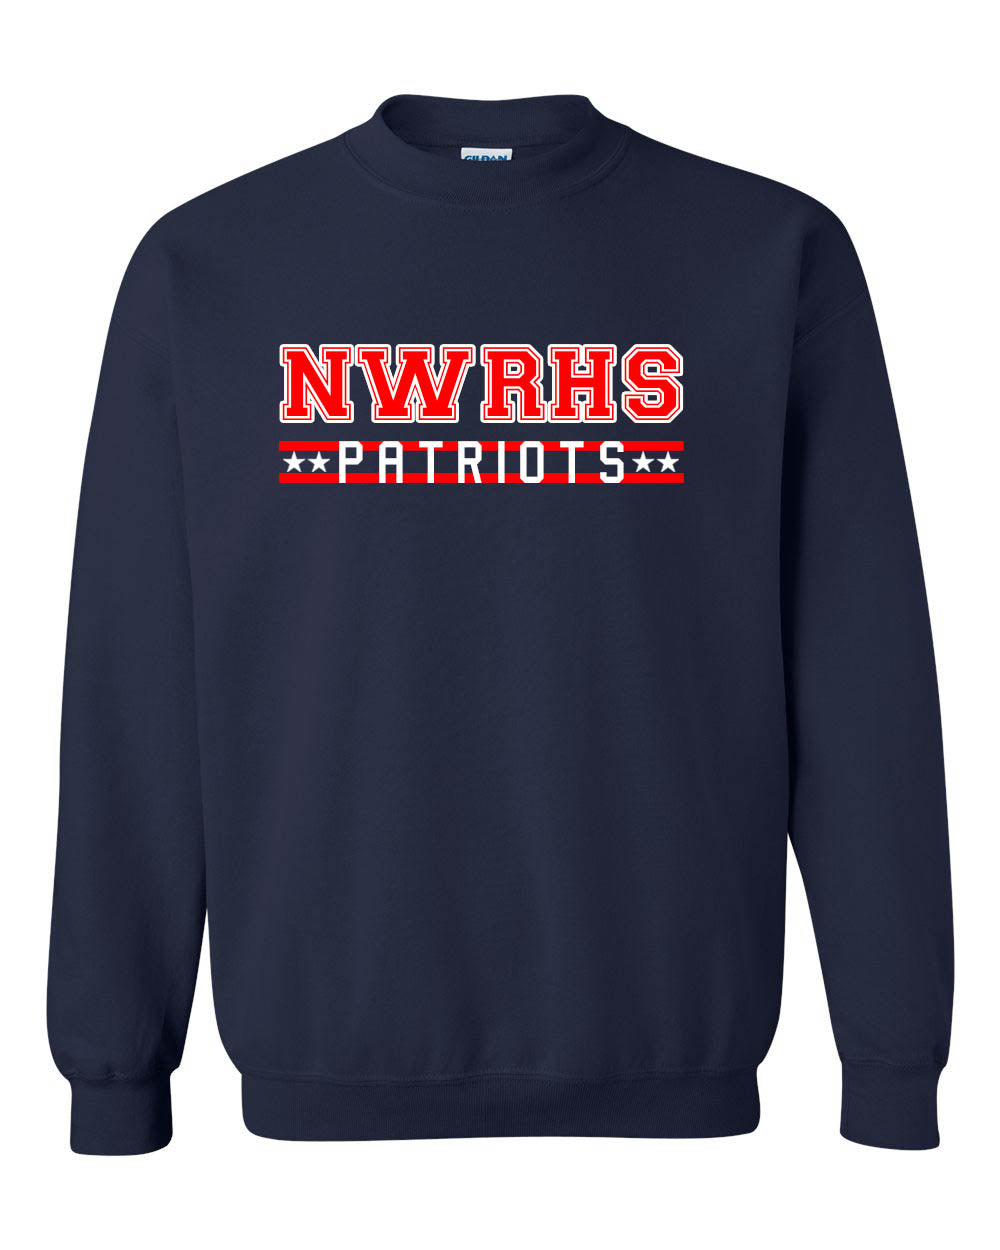 NWRHS Patriots non hooded sweatshirt